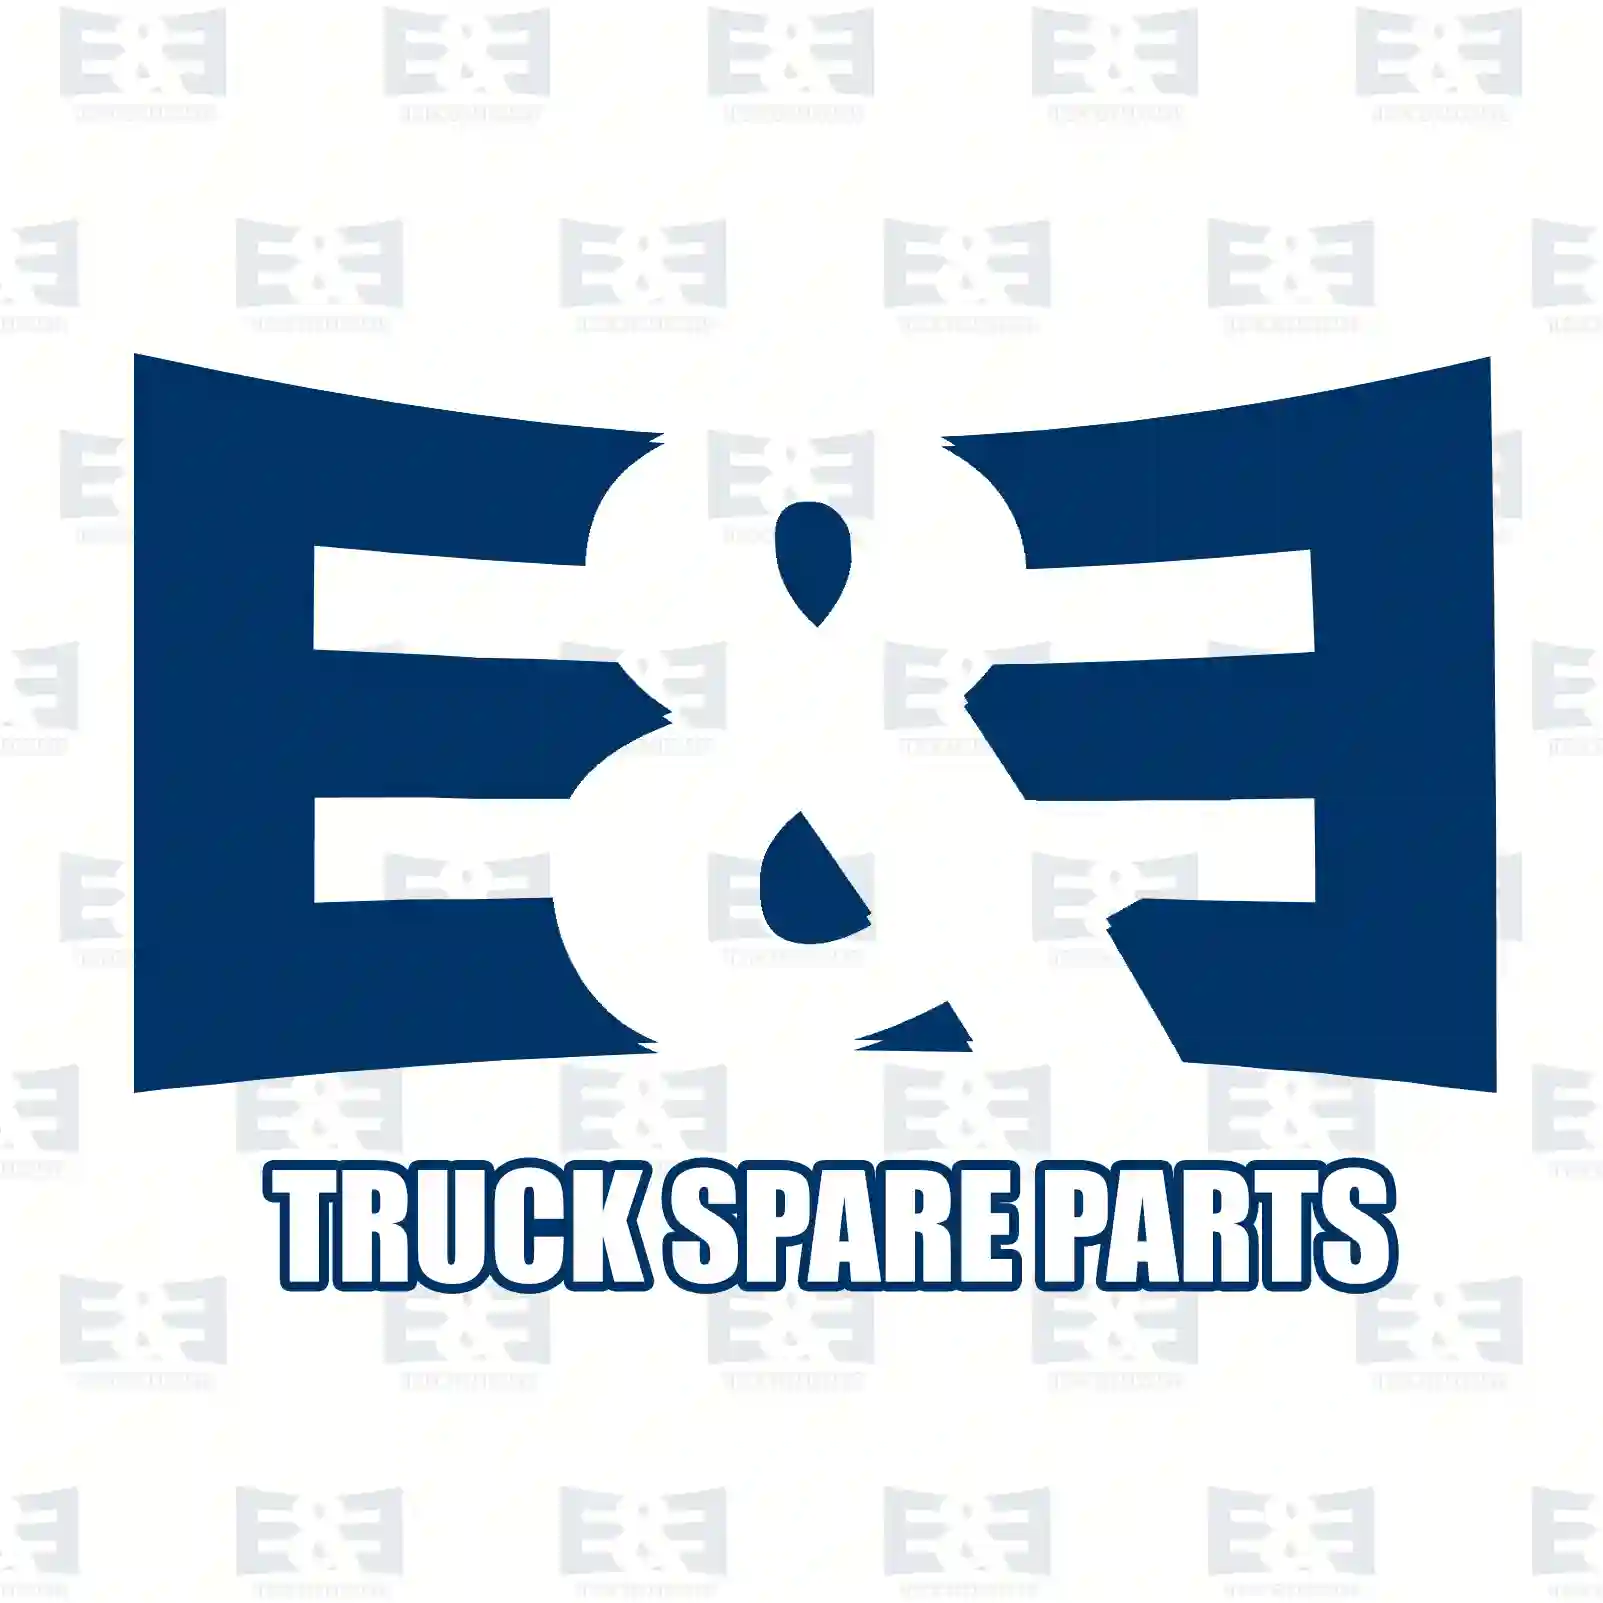 Hub Oil seal, EE No 2E2284073 ,  oem no:0256647400, 2198511, E&E Truck Spare Parts | Truck Spare Parts, Auotomotive Spare Parts